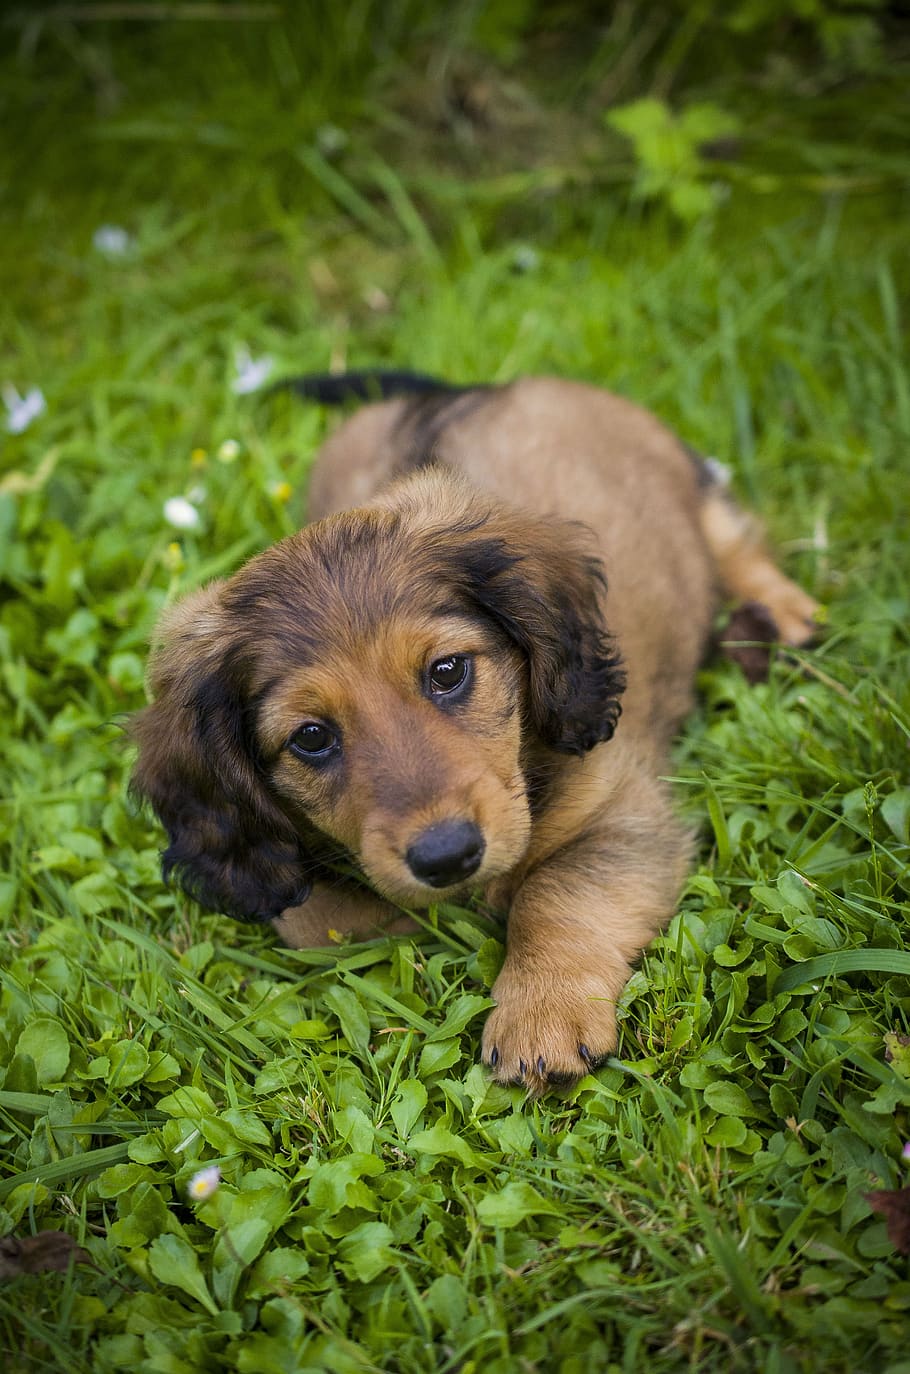 dachshund, puppy, grass, outdoors, cute, dog, one animal, canine, mammal, domestic